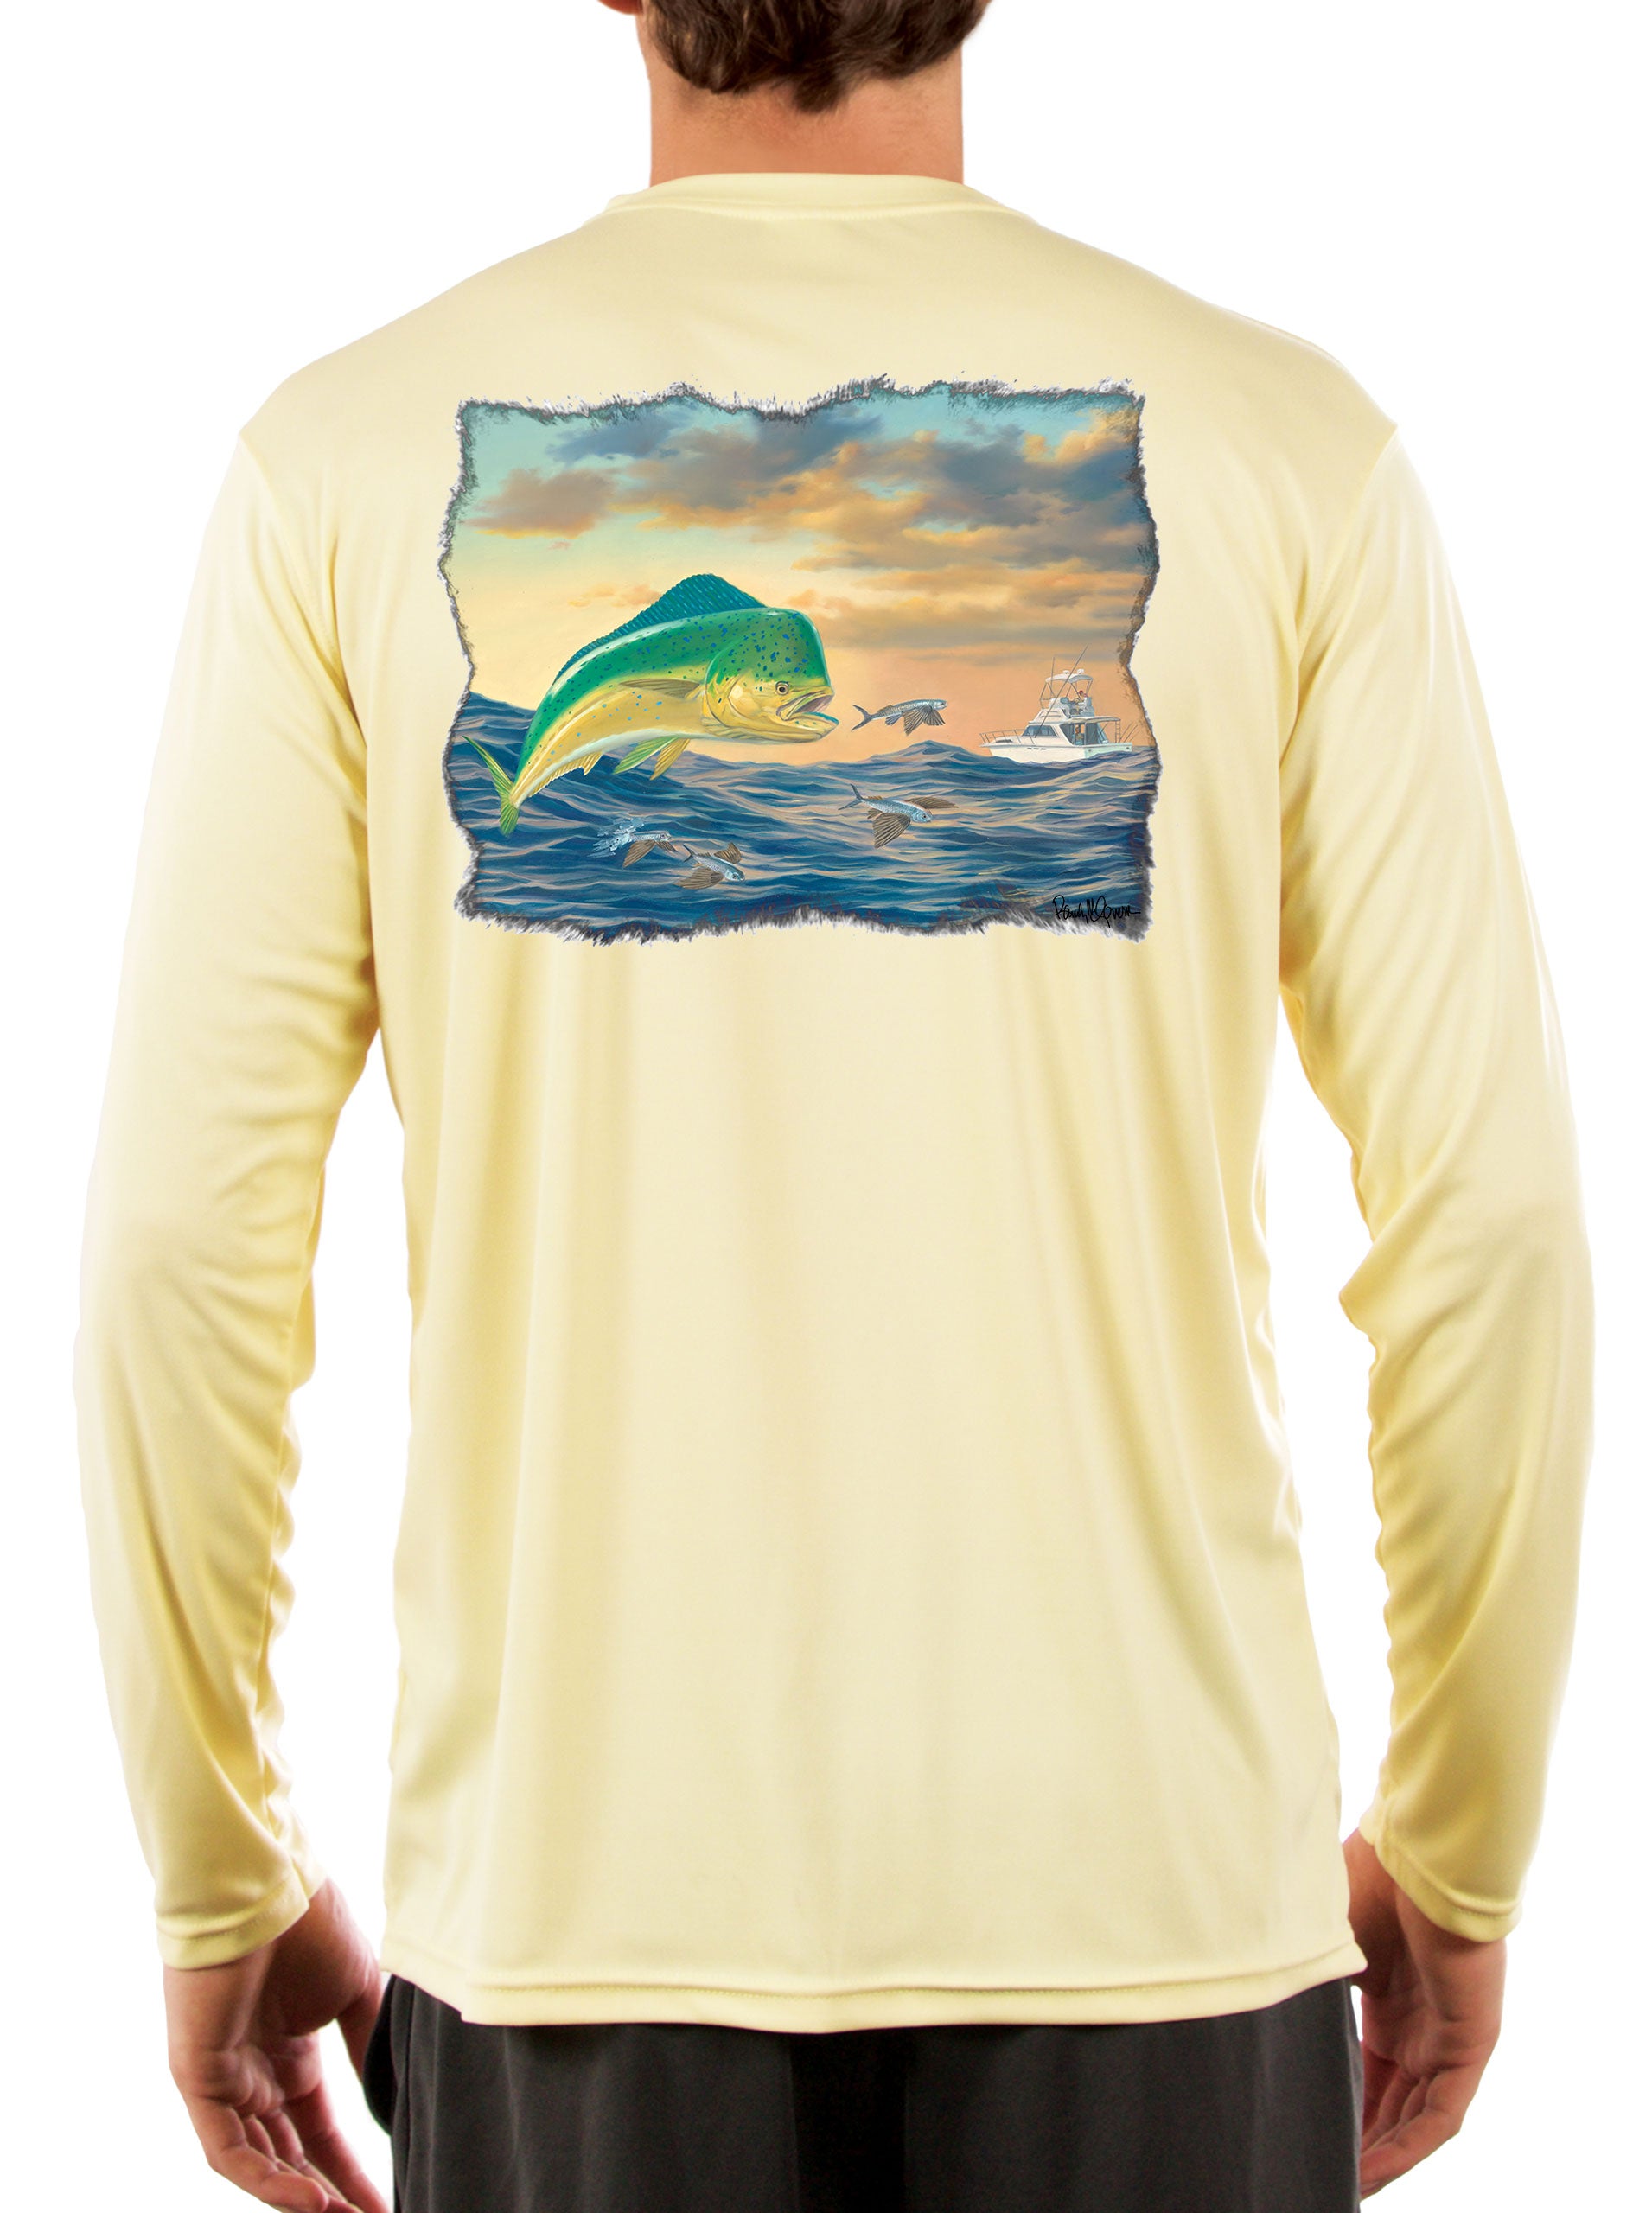 Mahi-mahi with Flying Fish Fishing Shirts for Men Featuring Dorado / Dolphinfish Art by Randy McGovern 4XL / Yellow